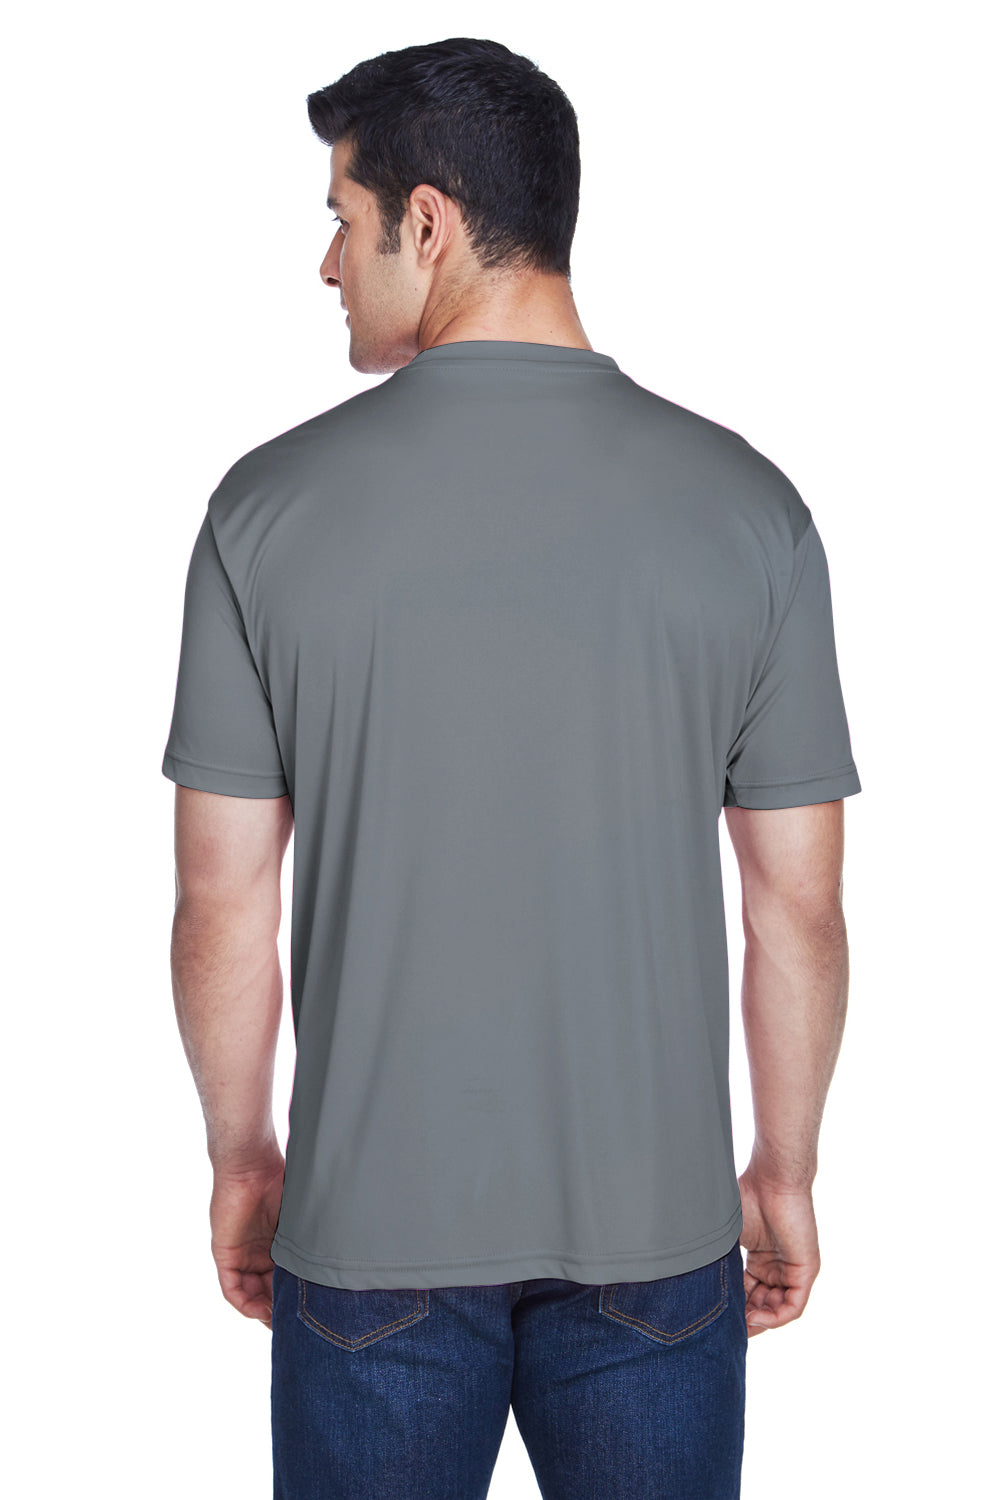 UltraClub 8420 Mens Cool & Dry Performance Moisture Wicking Short Sleeve Crewneck T-Shirt Charcoal Grey Back